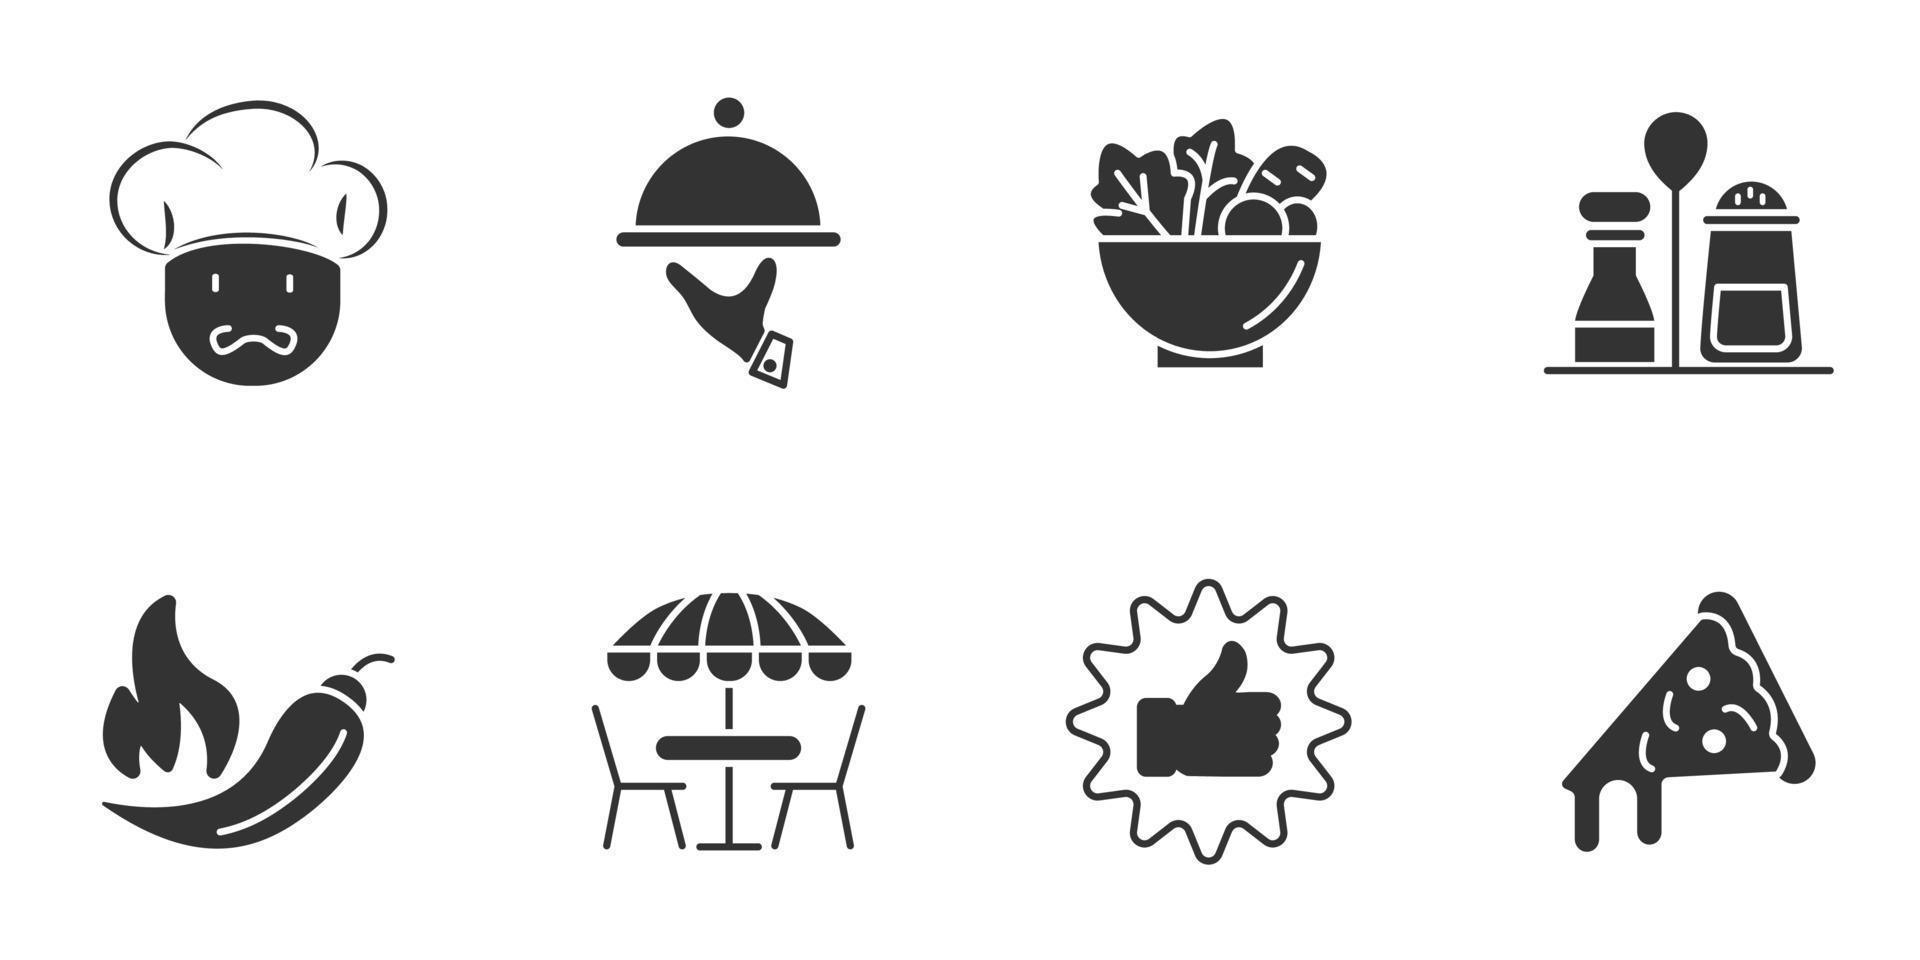 restaurant icons set .  restaurant pack symbol vector elements for infographic web